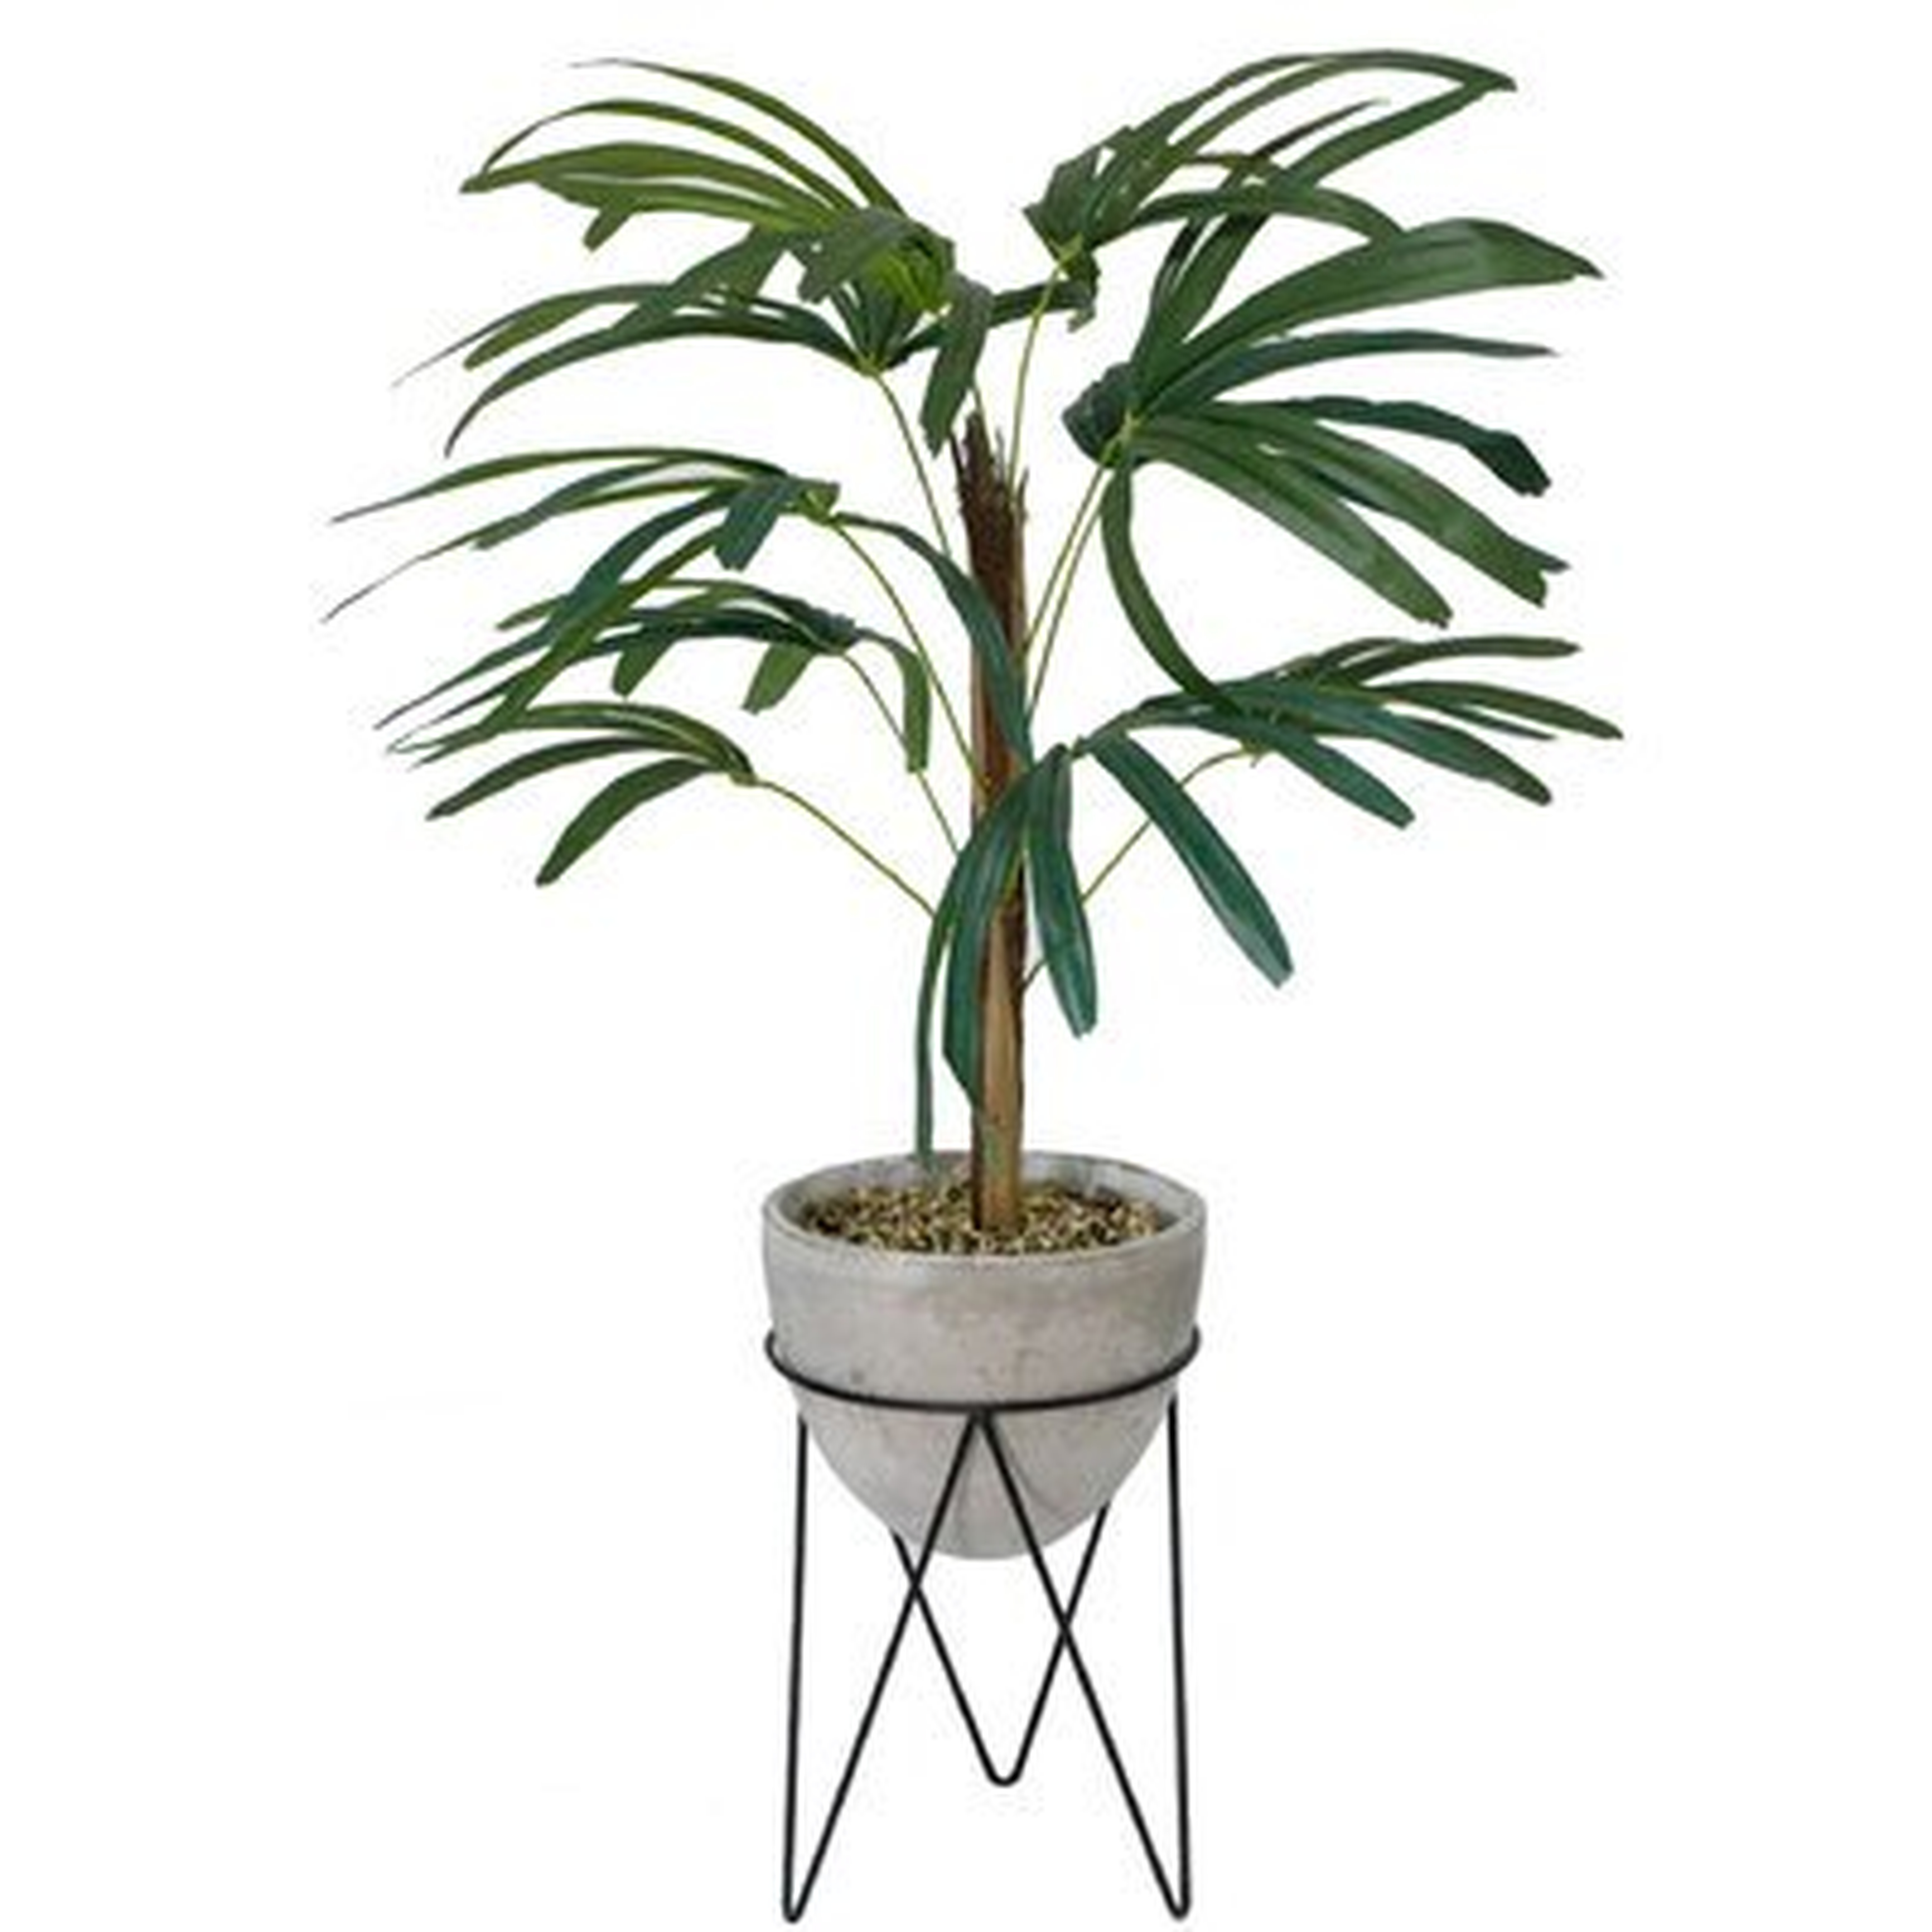 Palm Tree in Planter - Wayfair